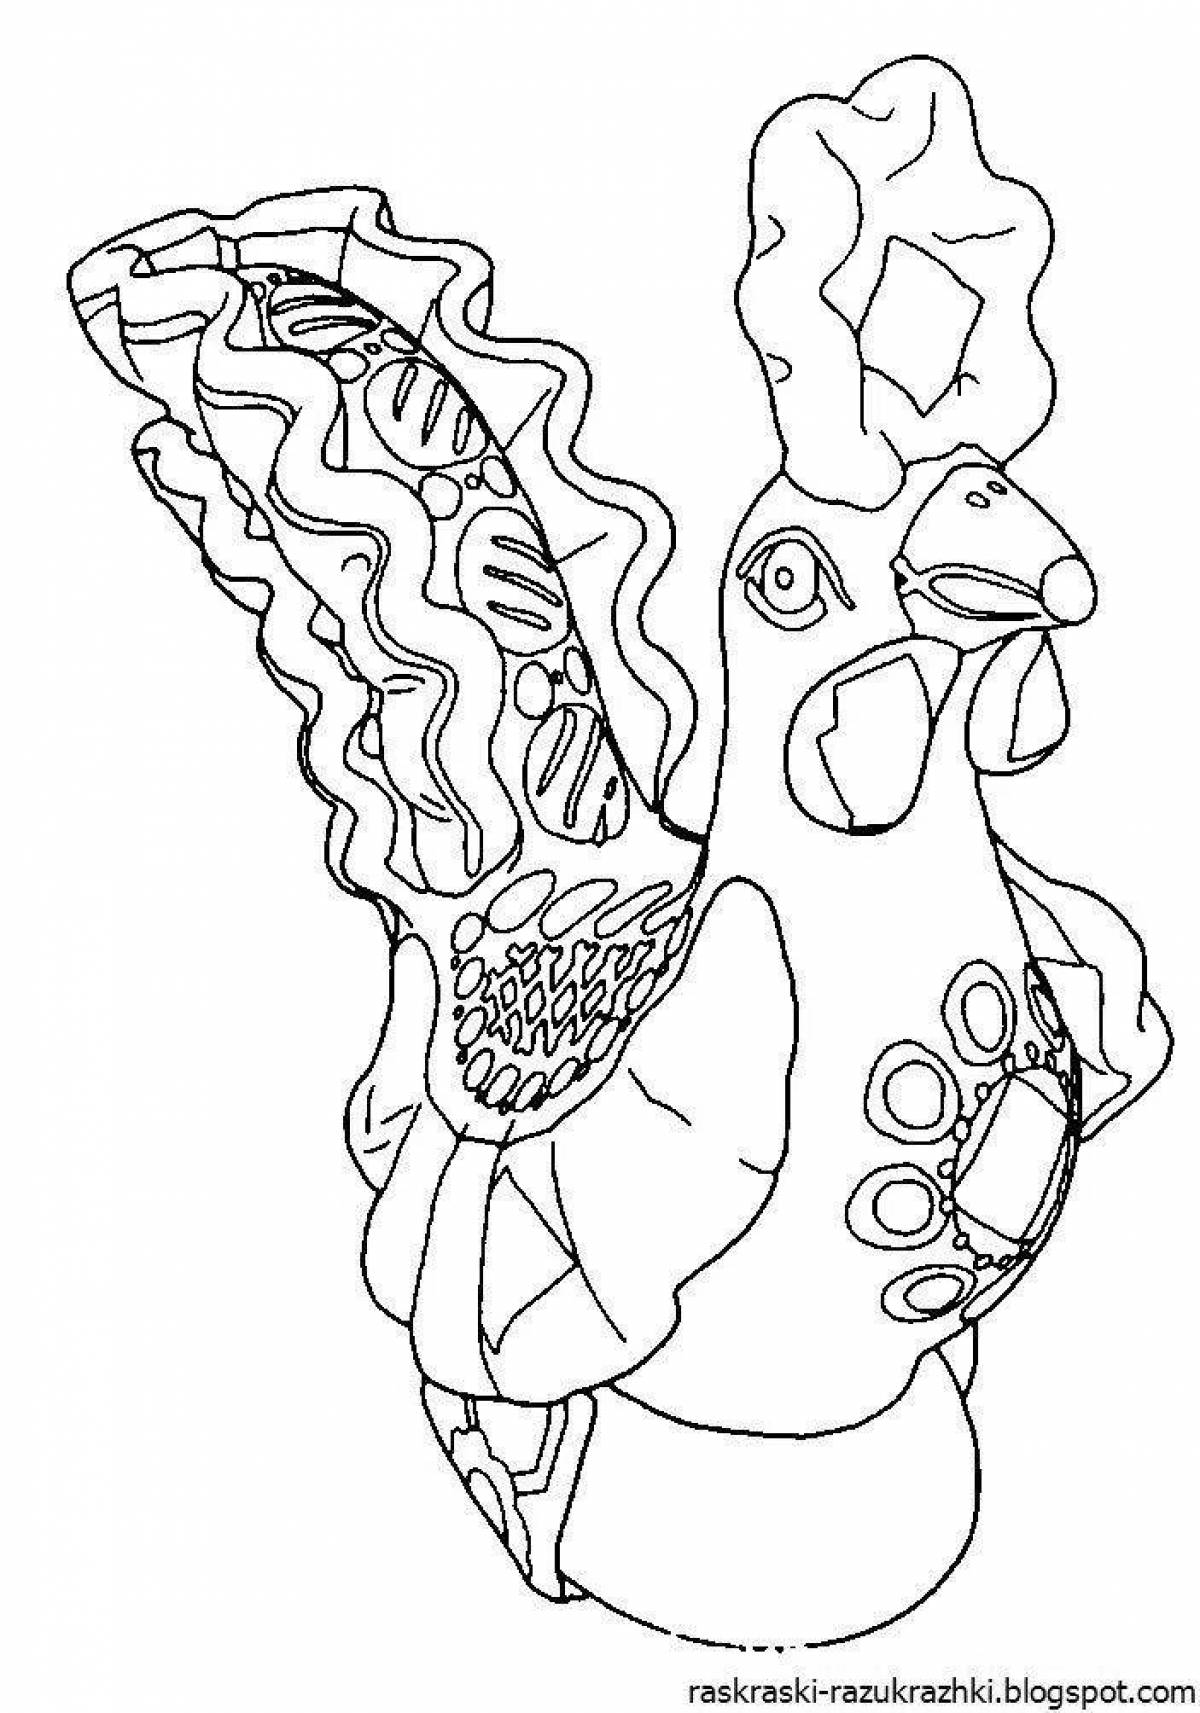 Coloring page charming dymkovo cockerel